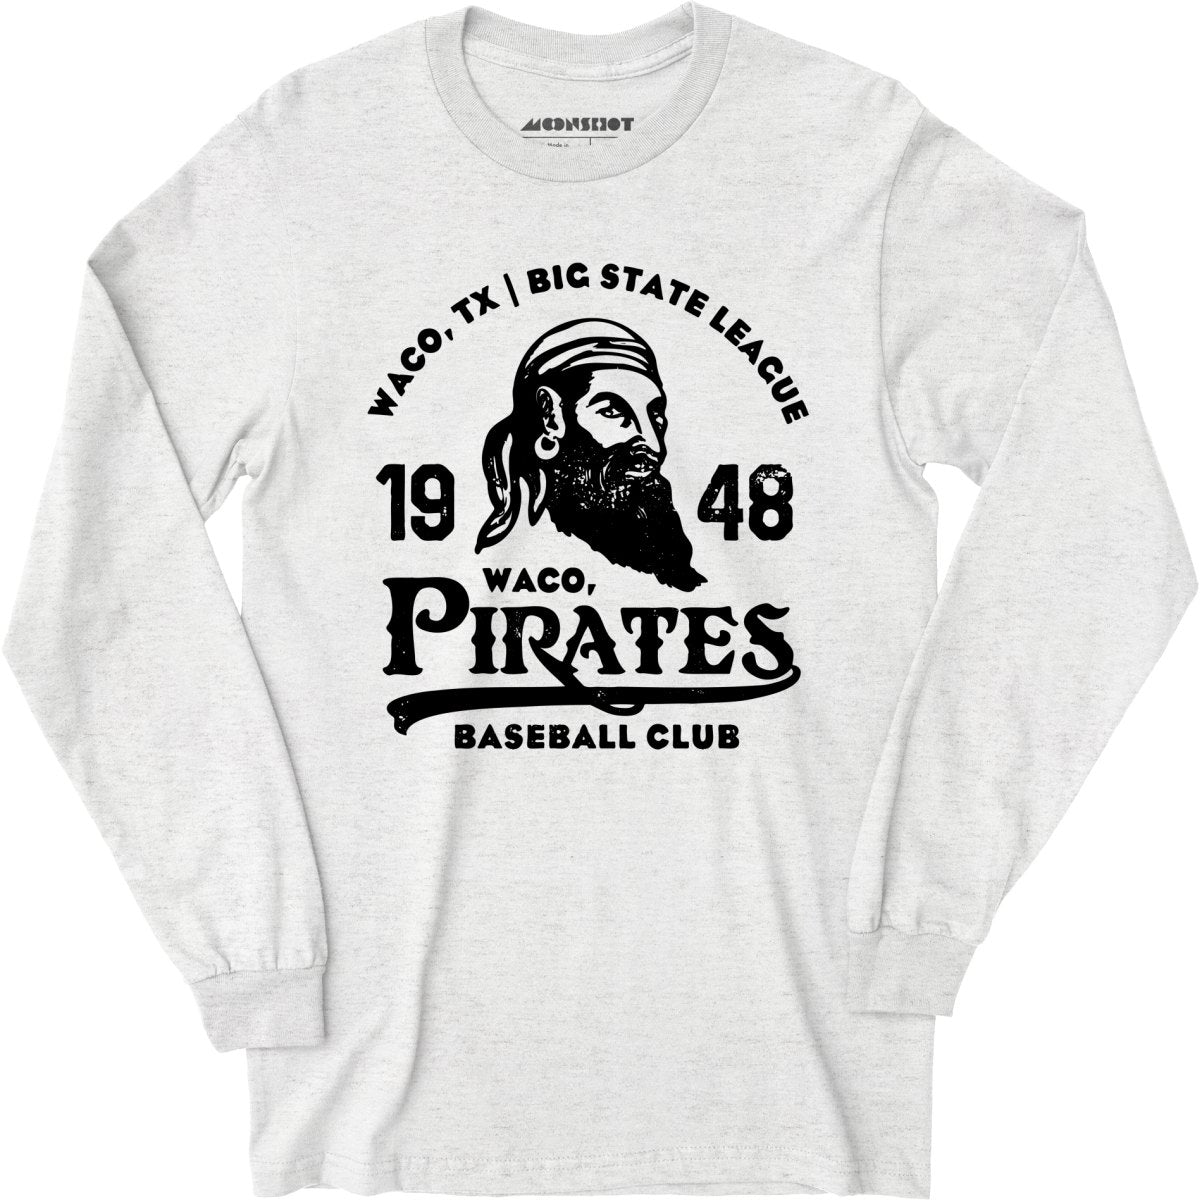 Waco Pirates - Texas - Vintage Defunct Baseball Teams - Long Sleeve T-Shirt